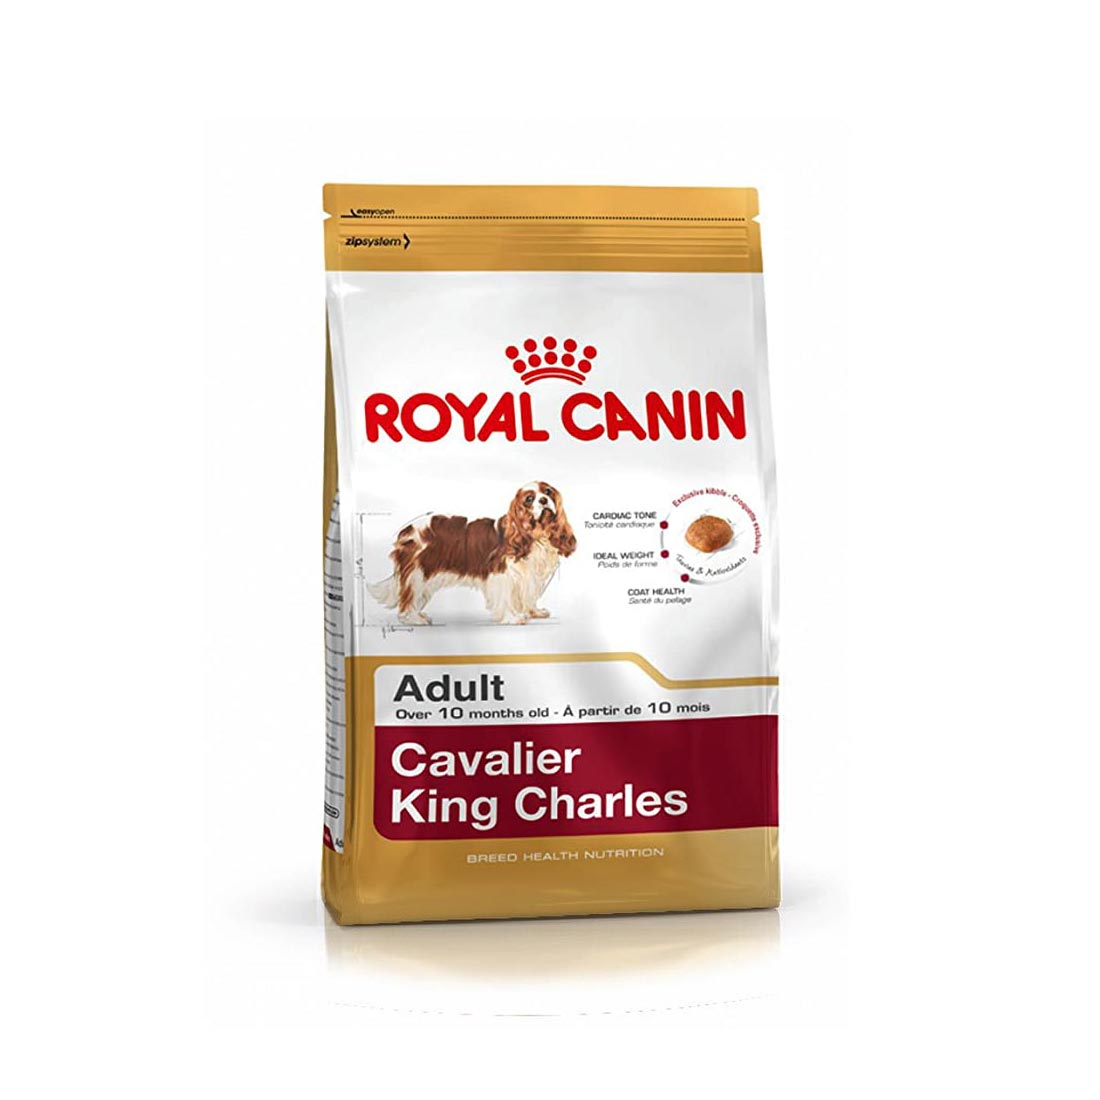 Royal Canin Dog Food Cavalier King Charles 1.5kg